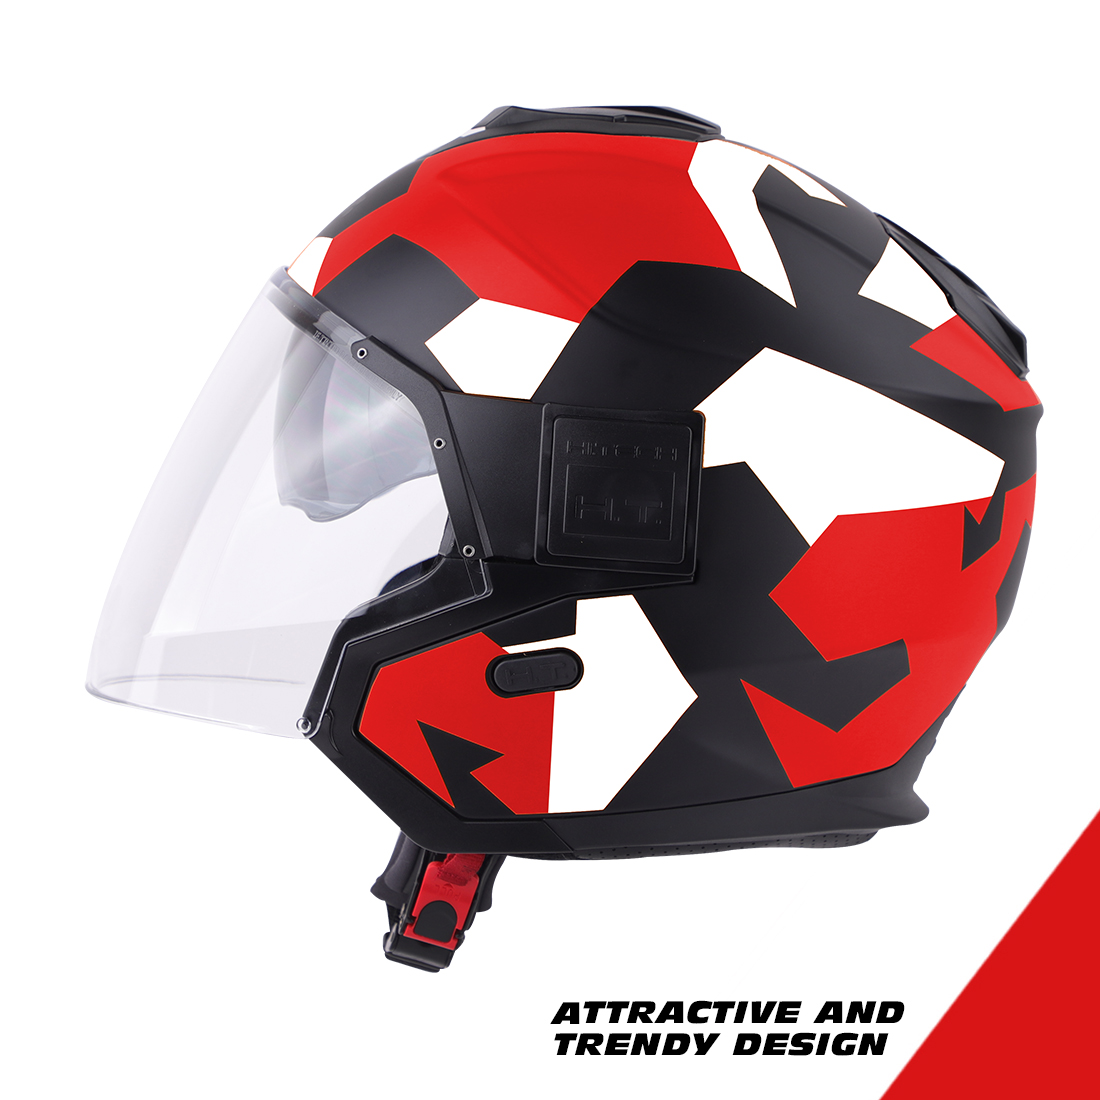 Steelbird Blauer Solo Camo ISI/DOT Certified Open Face Helmet With Inner Sun Shield (Matt Black Red)